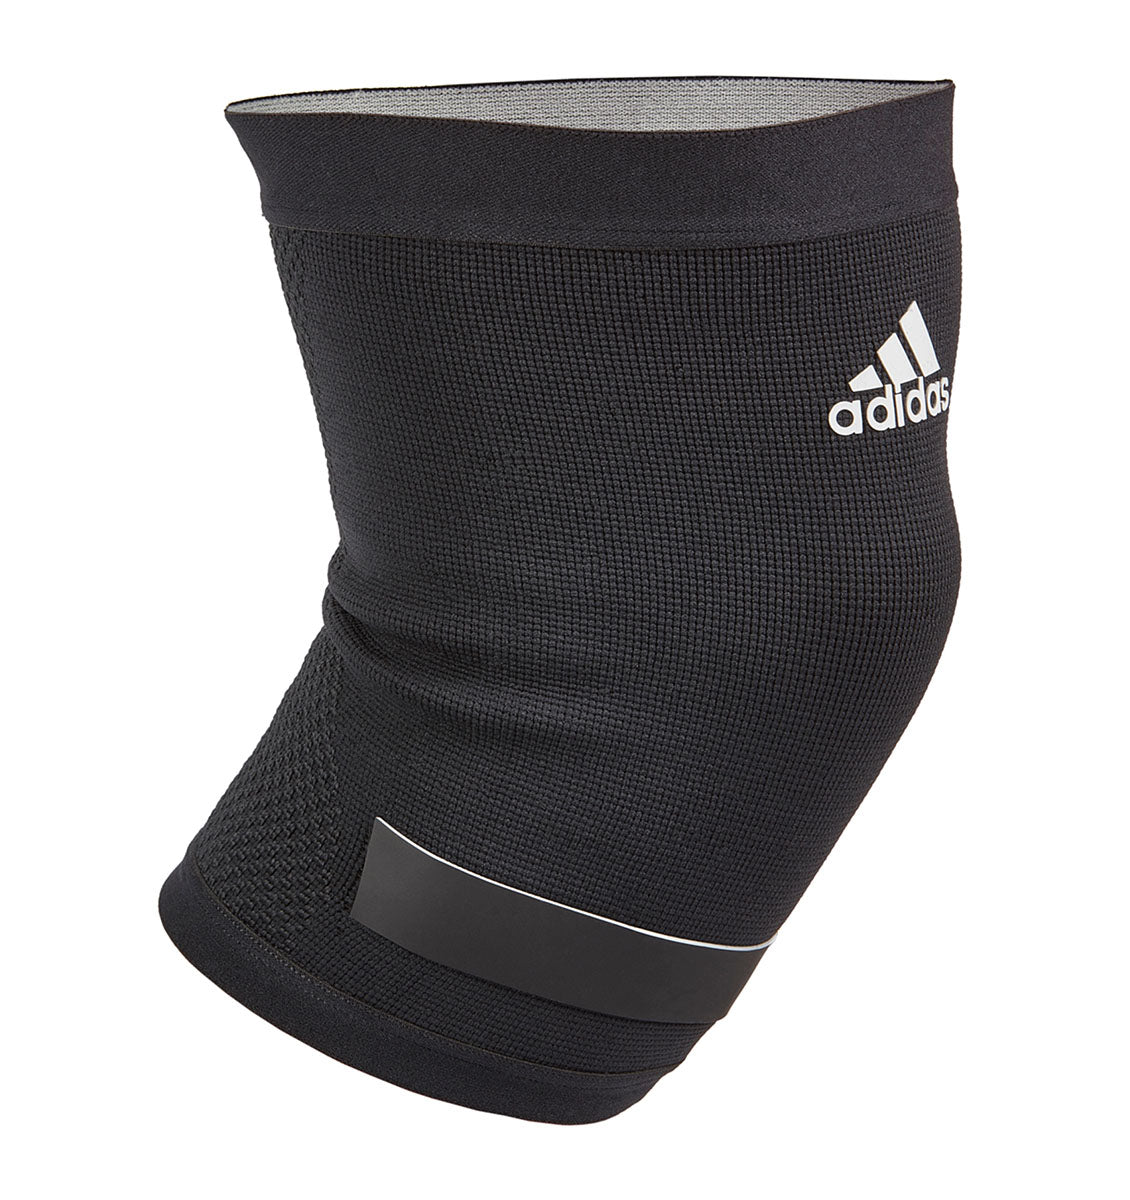 adidas Performance Climacool Knee Support/Sleeve - Black - 3